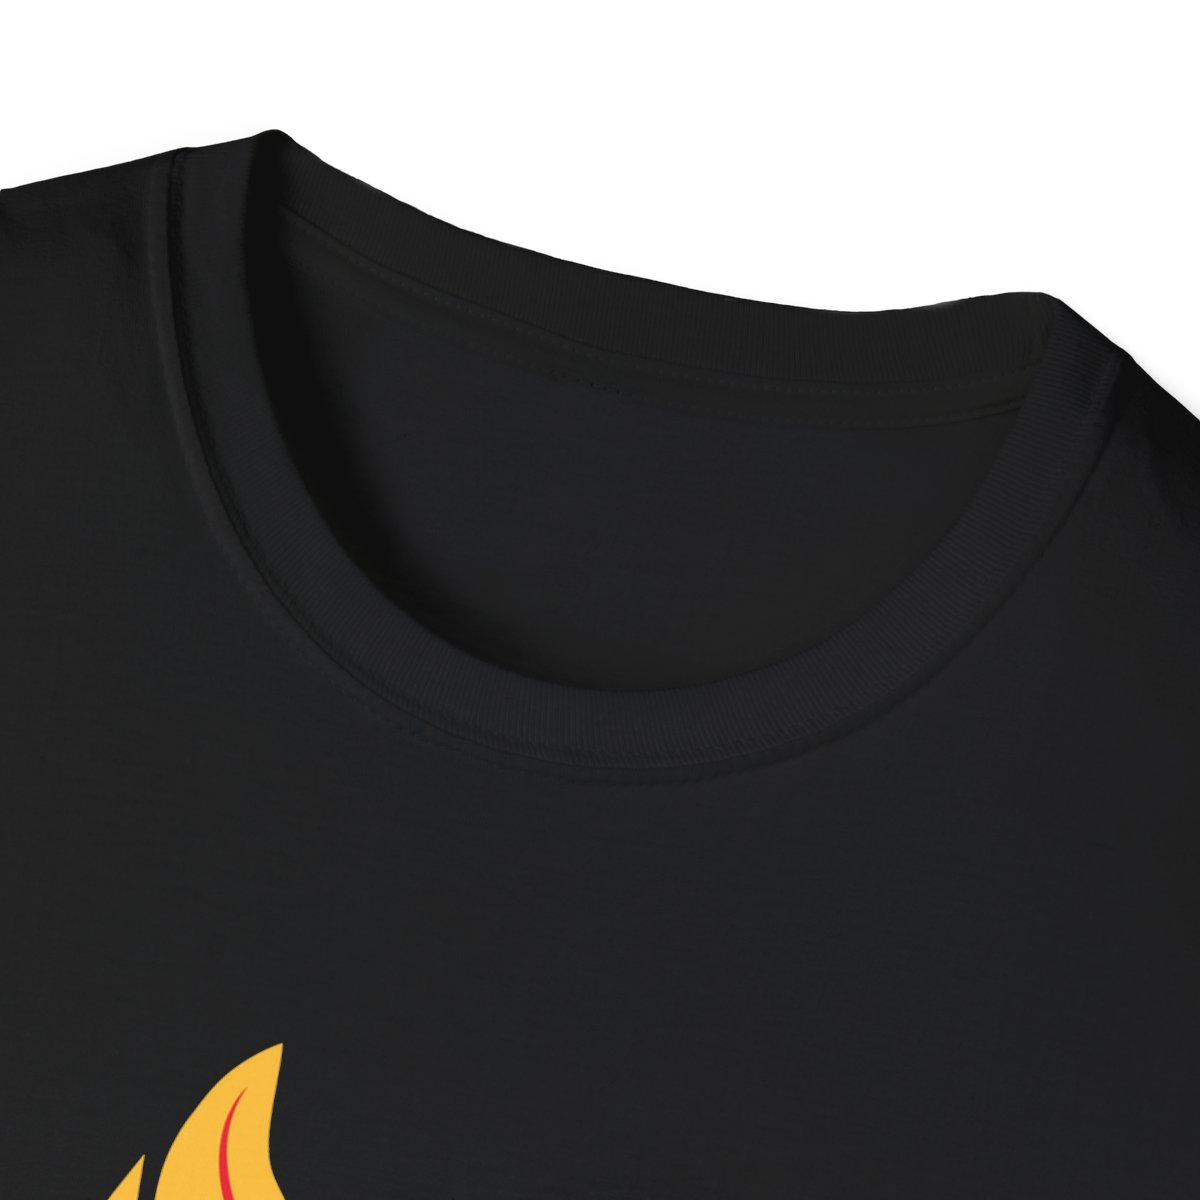 LARS 4 Pres - Black/Dark - T-Shirt - Unisex Softstyle product thumbnail image